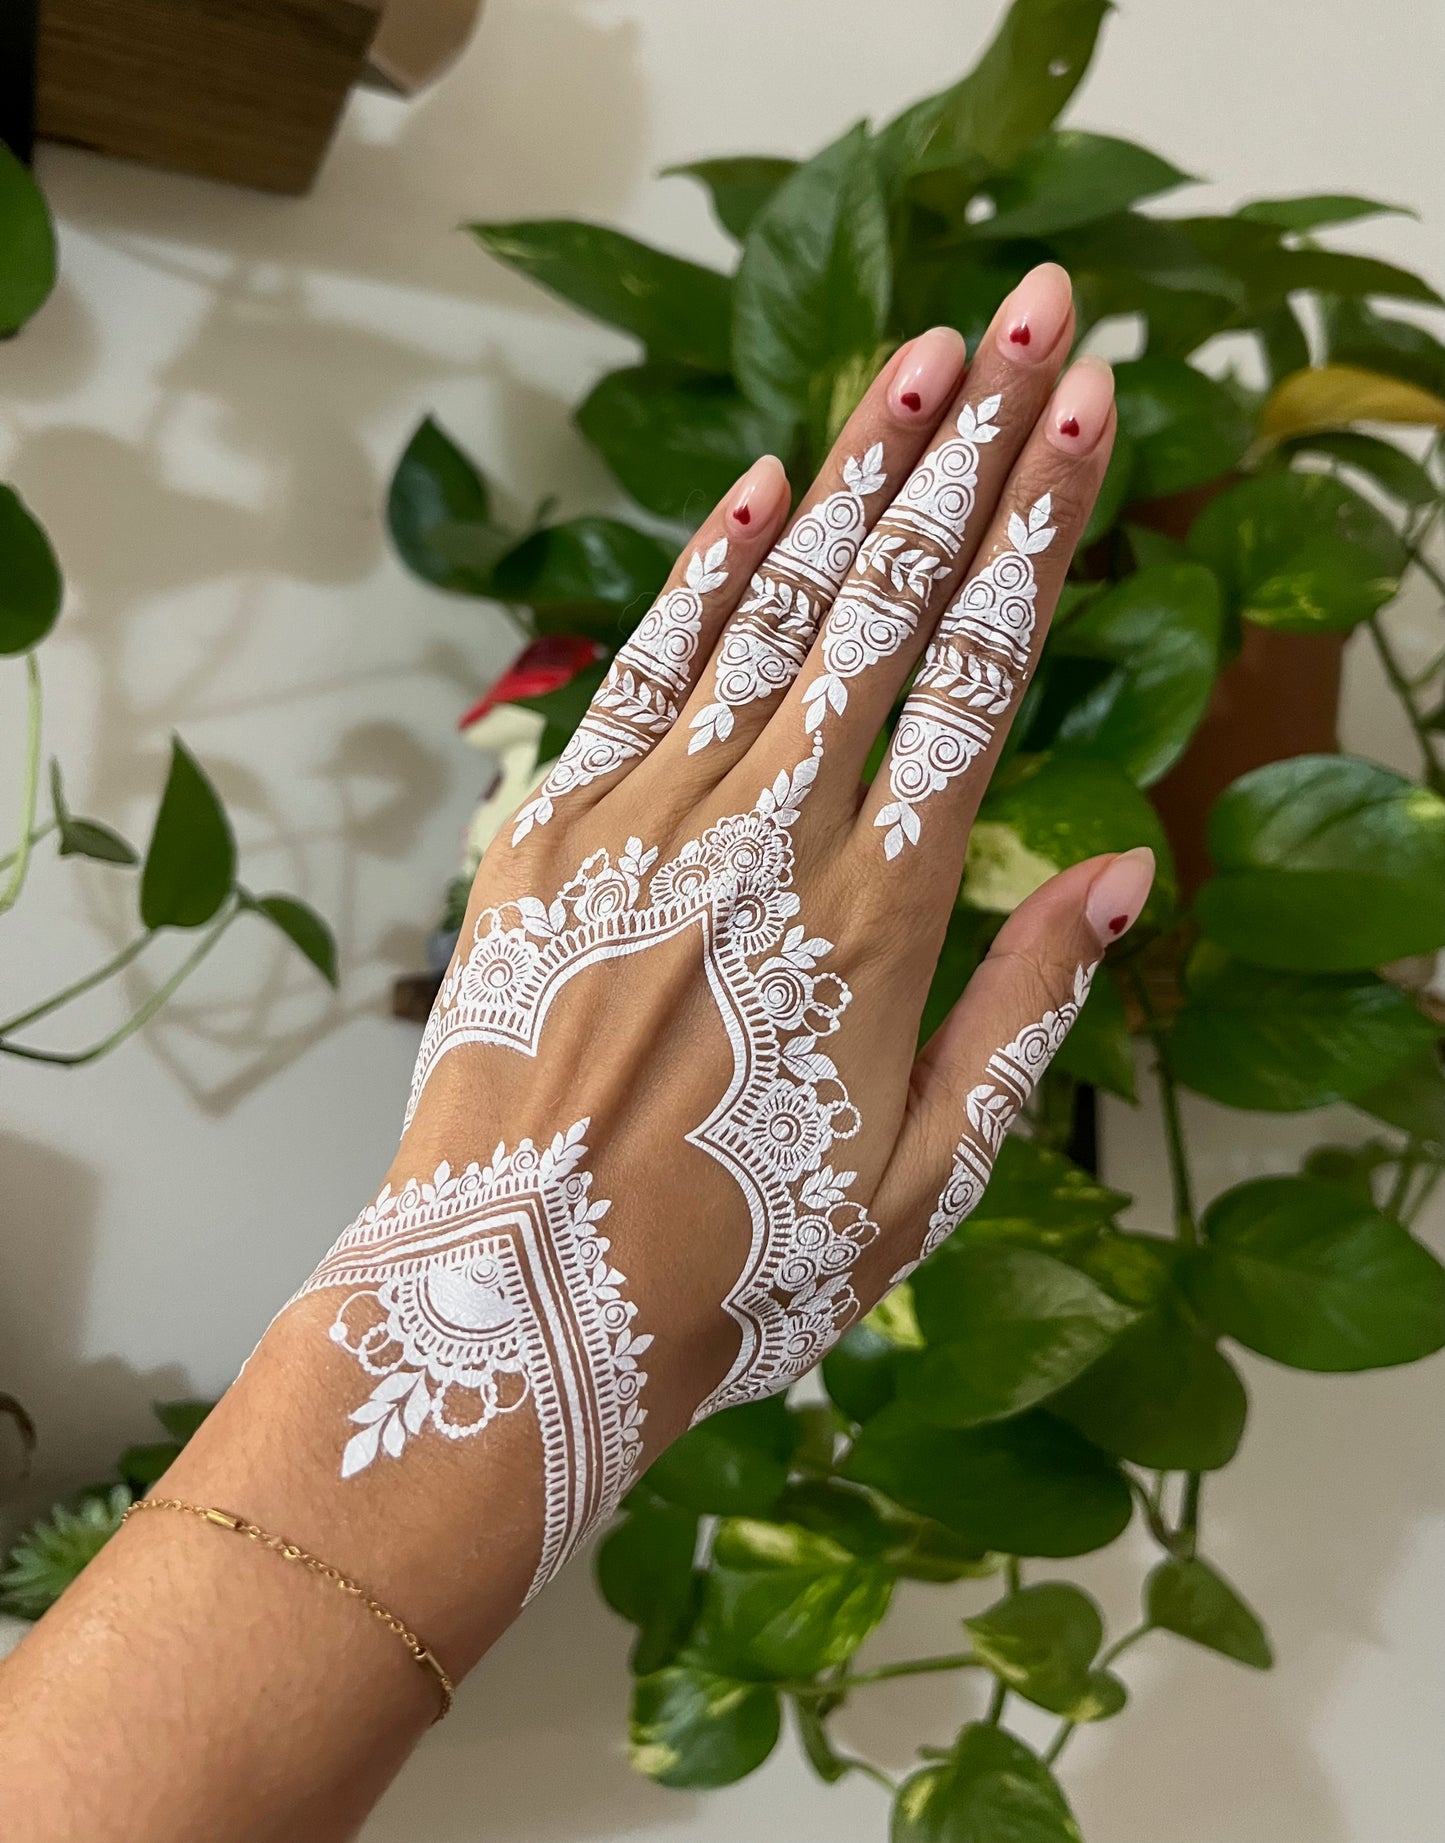 Mehel - Dome Shaped Instant Henna Tattoo (Design 25)